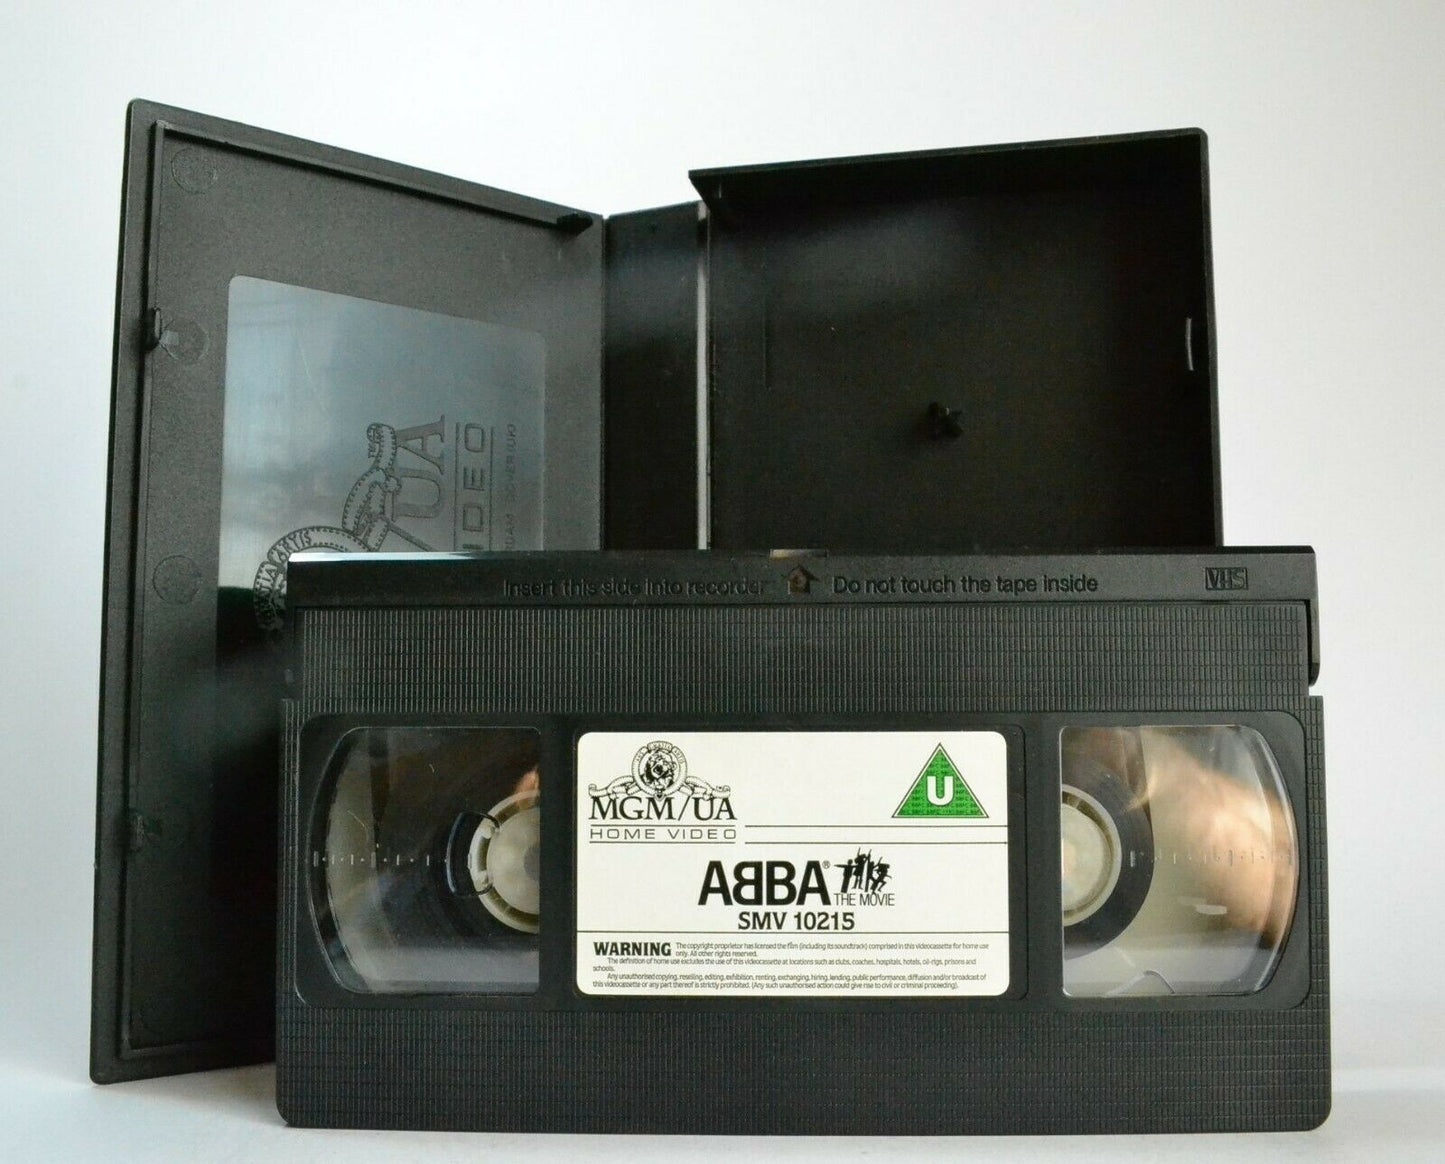 Abba The Movie (1977): Musical - 'Waterloo' - 'Dancing Queen' - 'Fernando' - VHS-